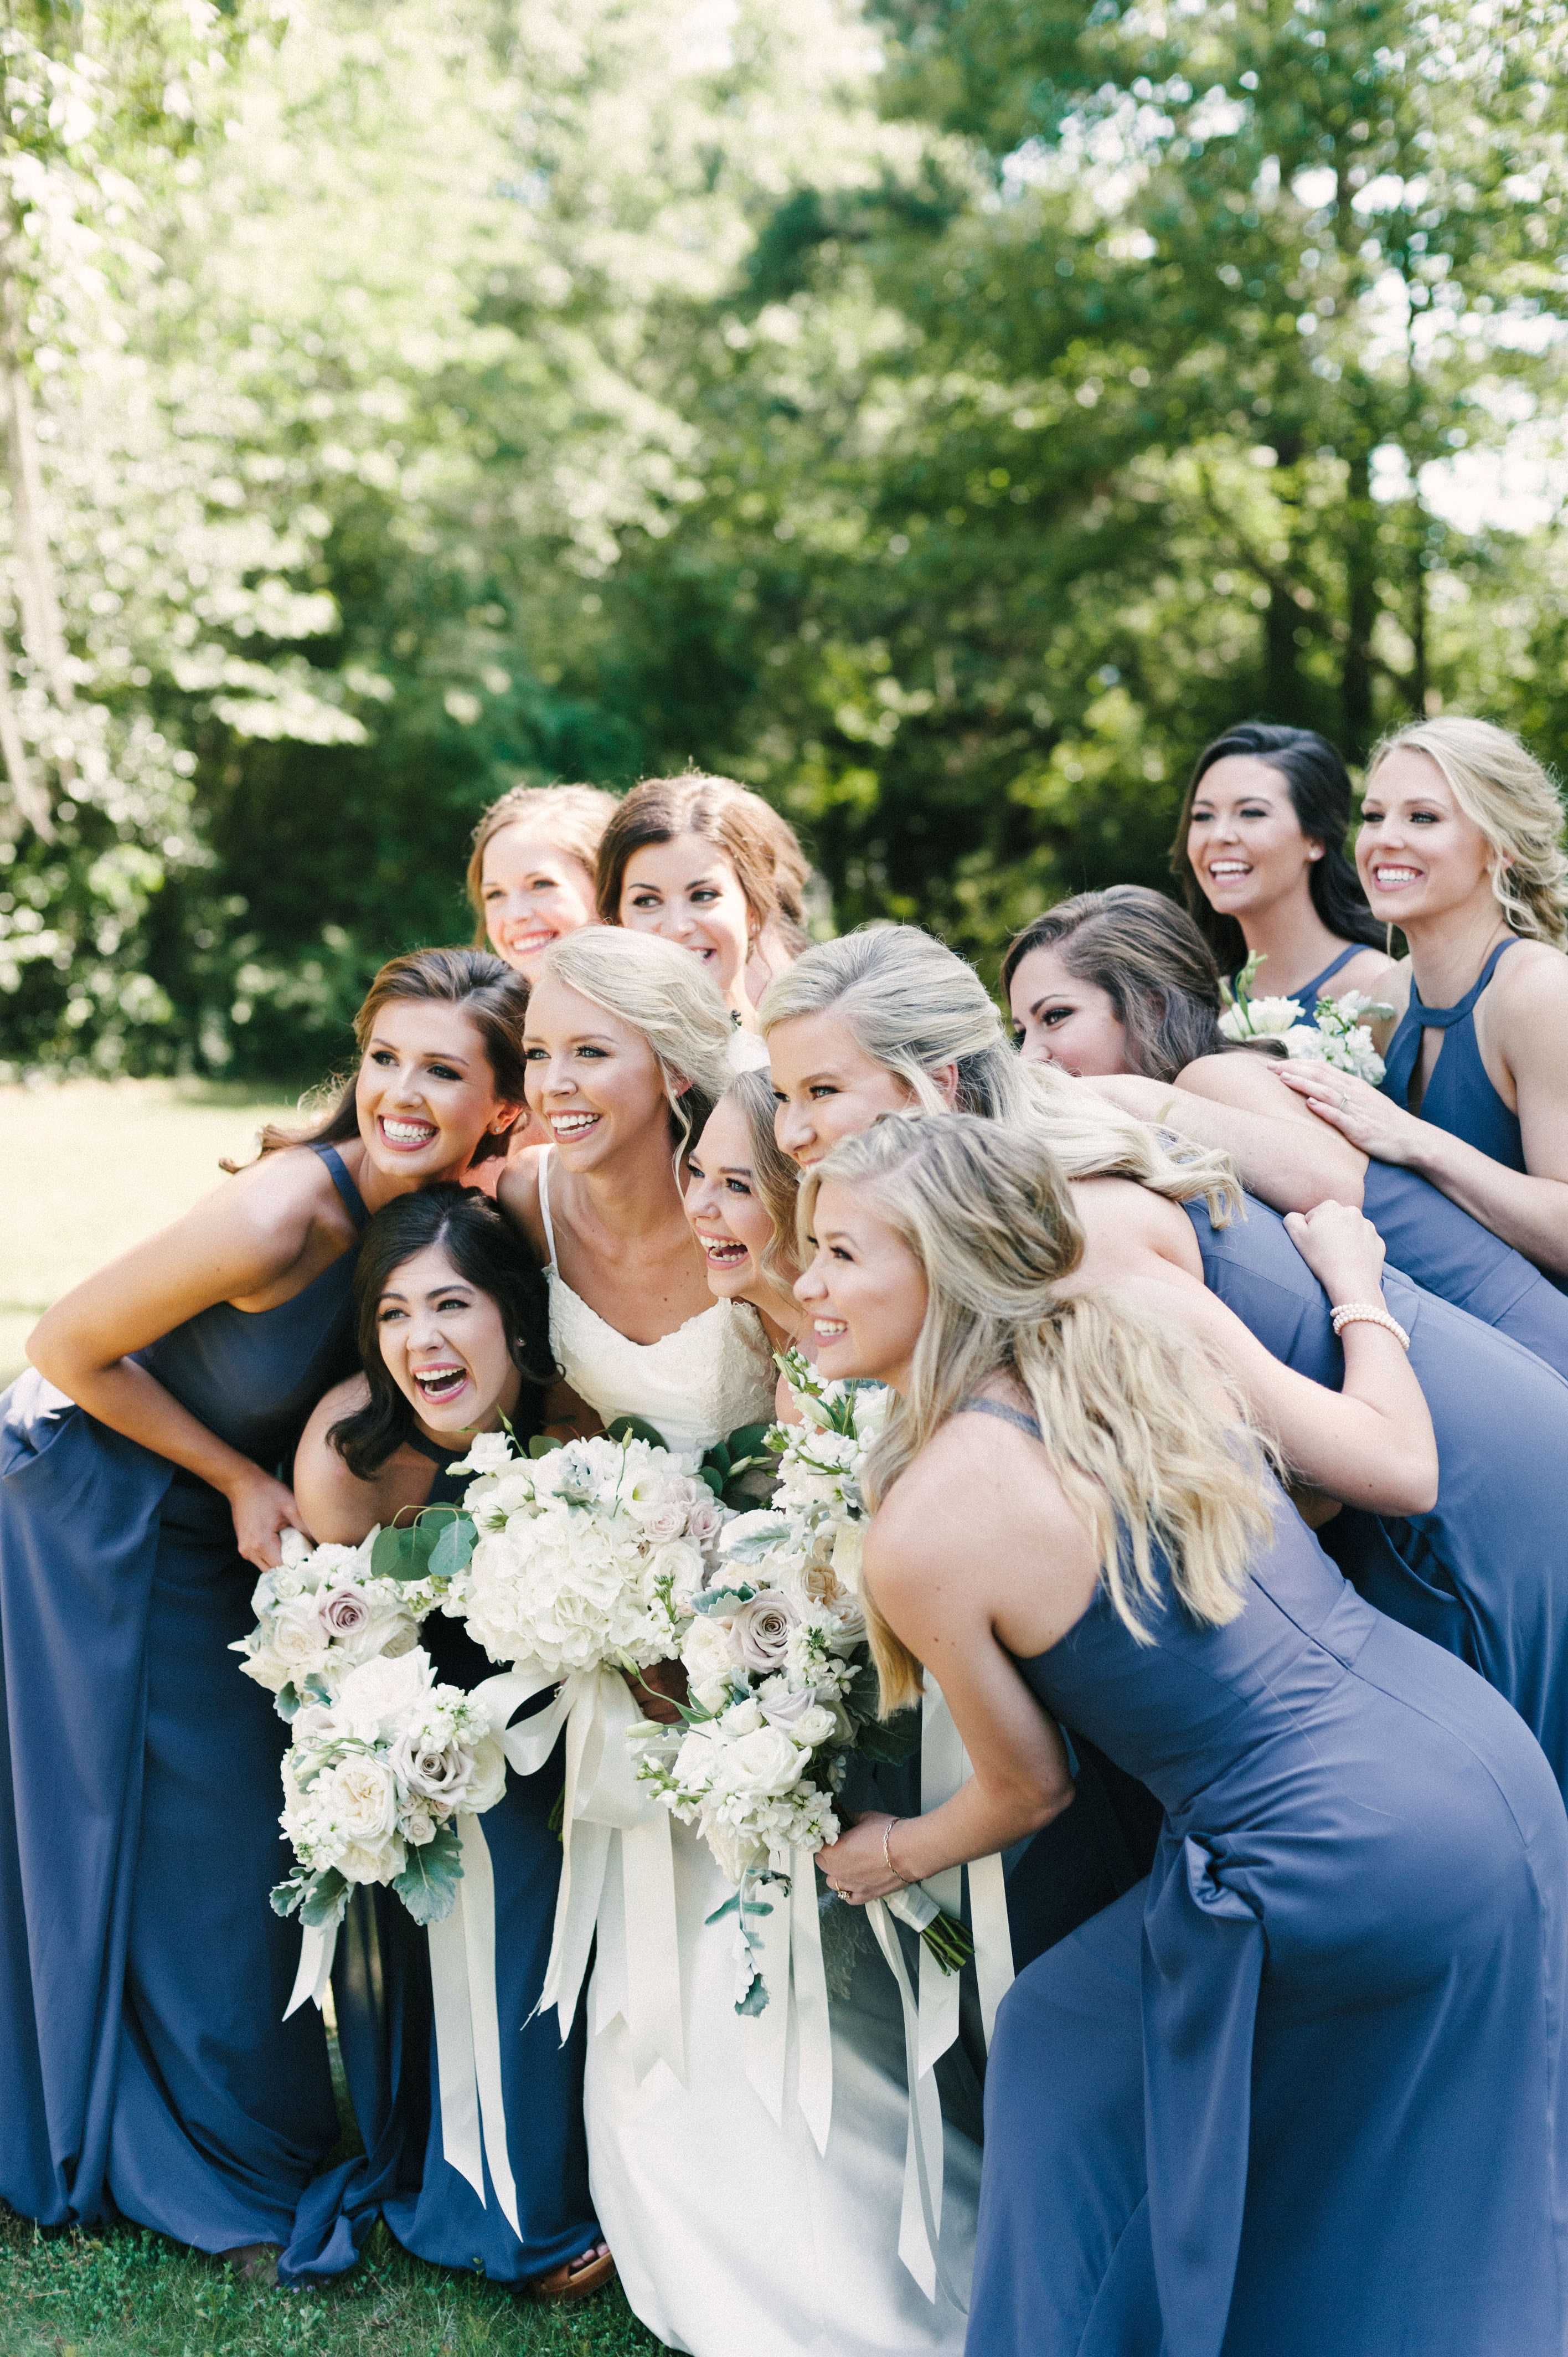 A really cute capture of a bride posing with ecstatic bridesmaids before Selma, Alabama wedding